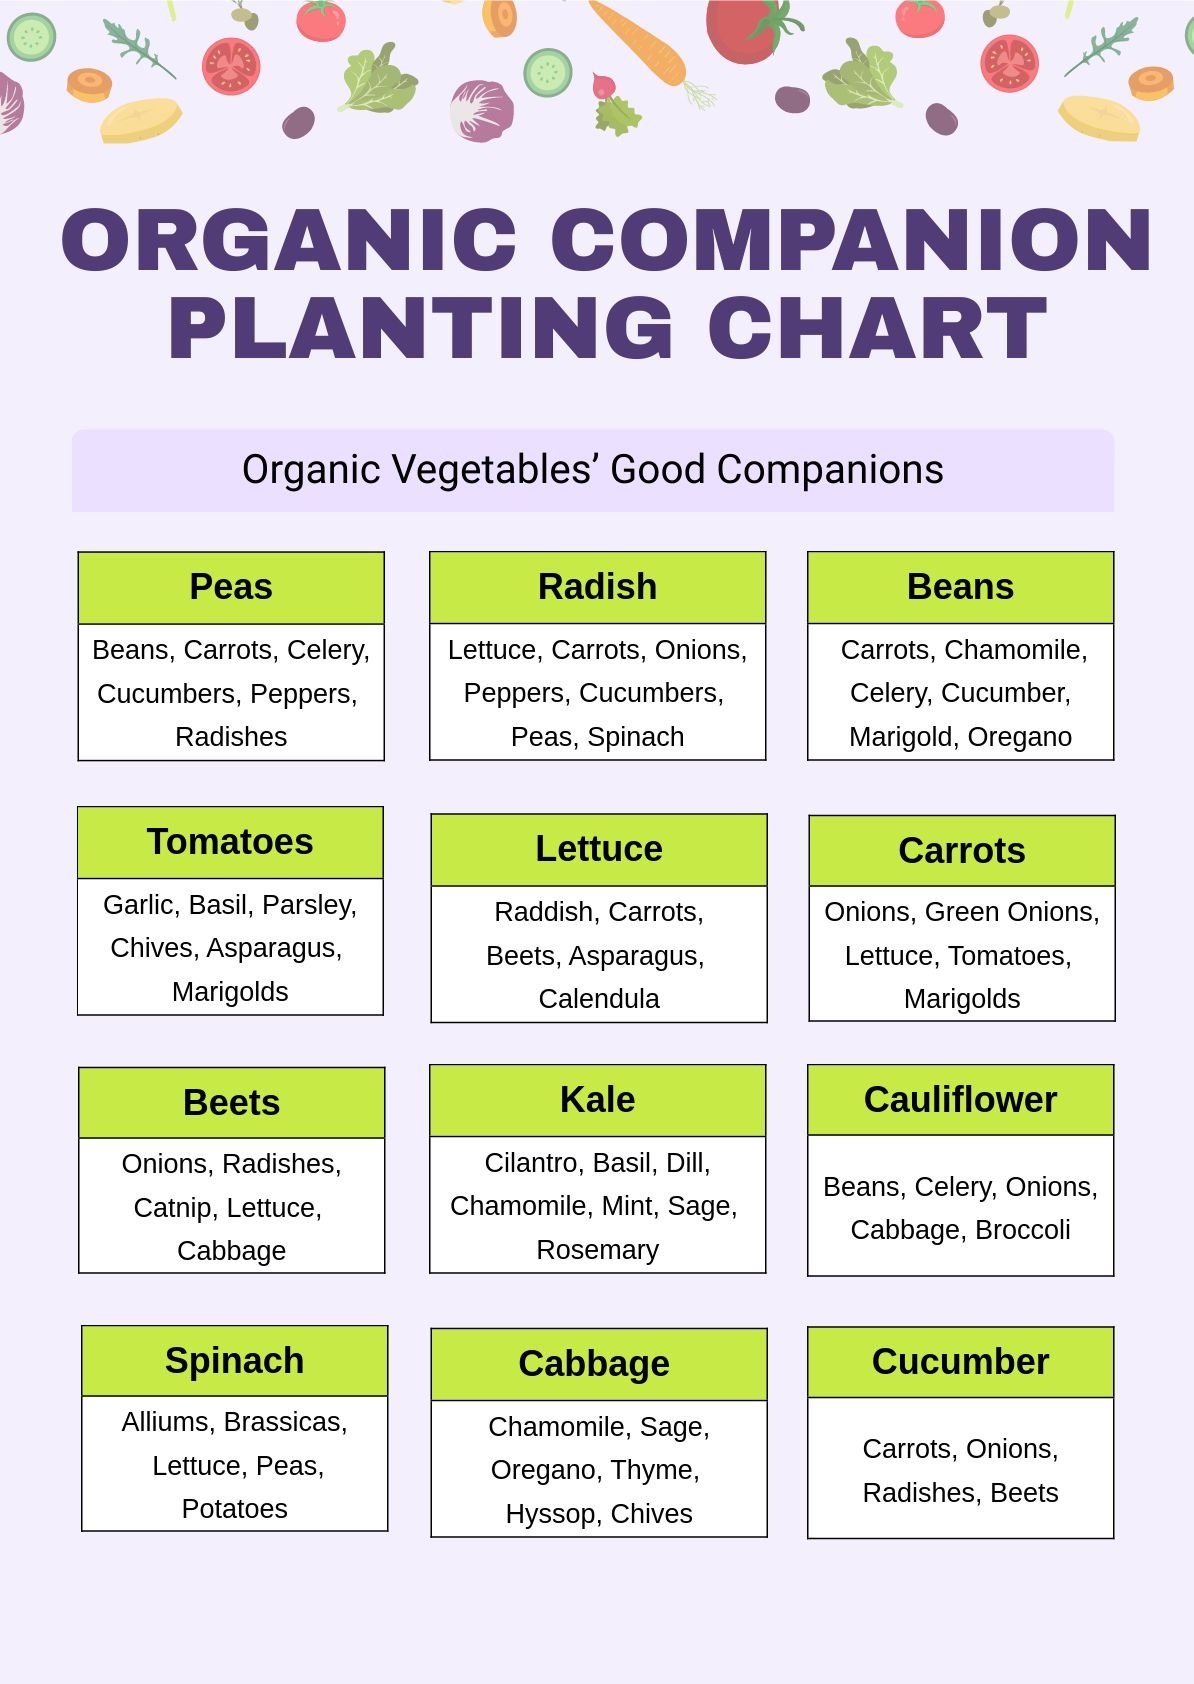 Organic Companion Planting Chart in PDF, Illustrator